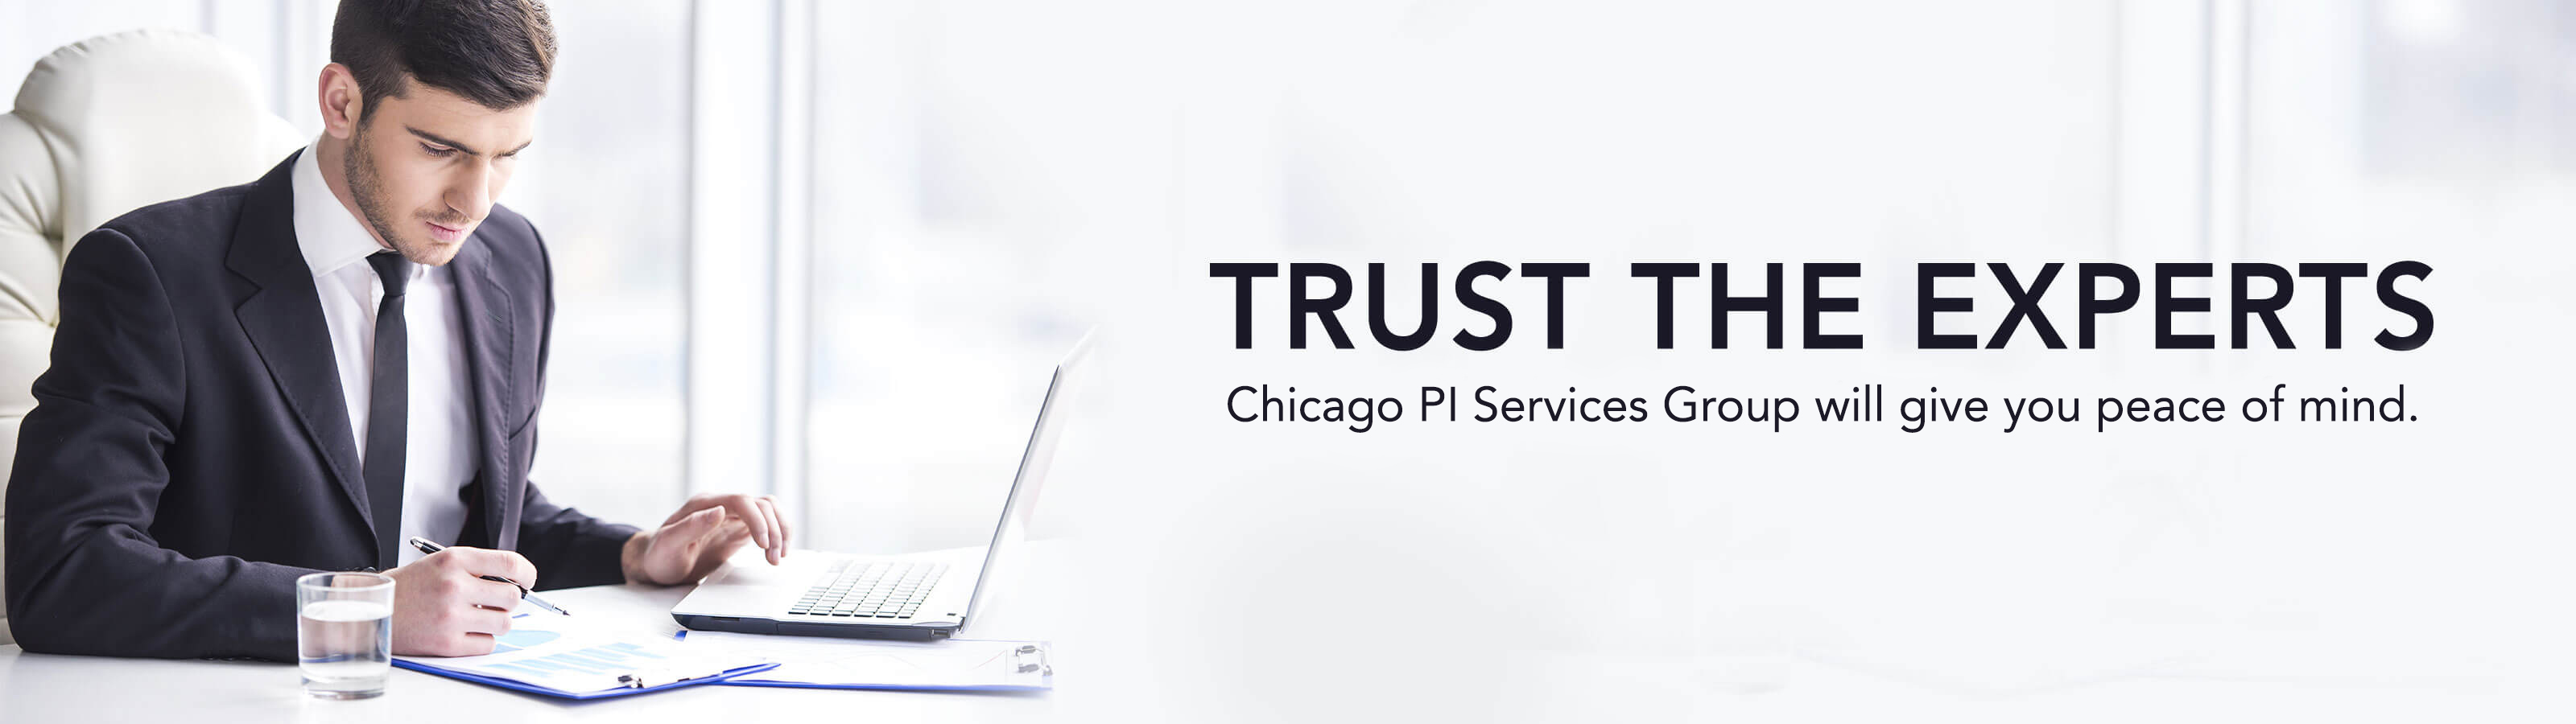 Chicago PI Services